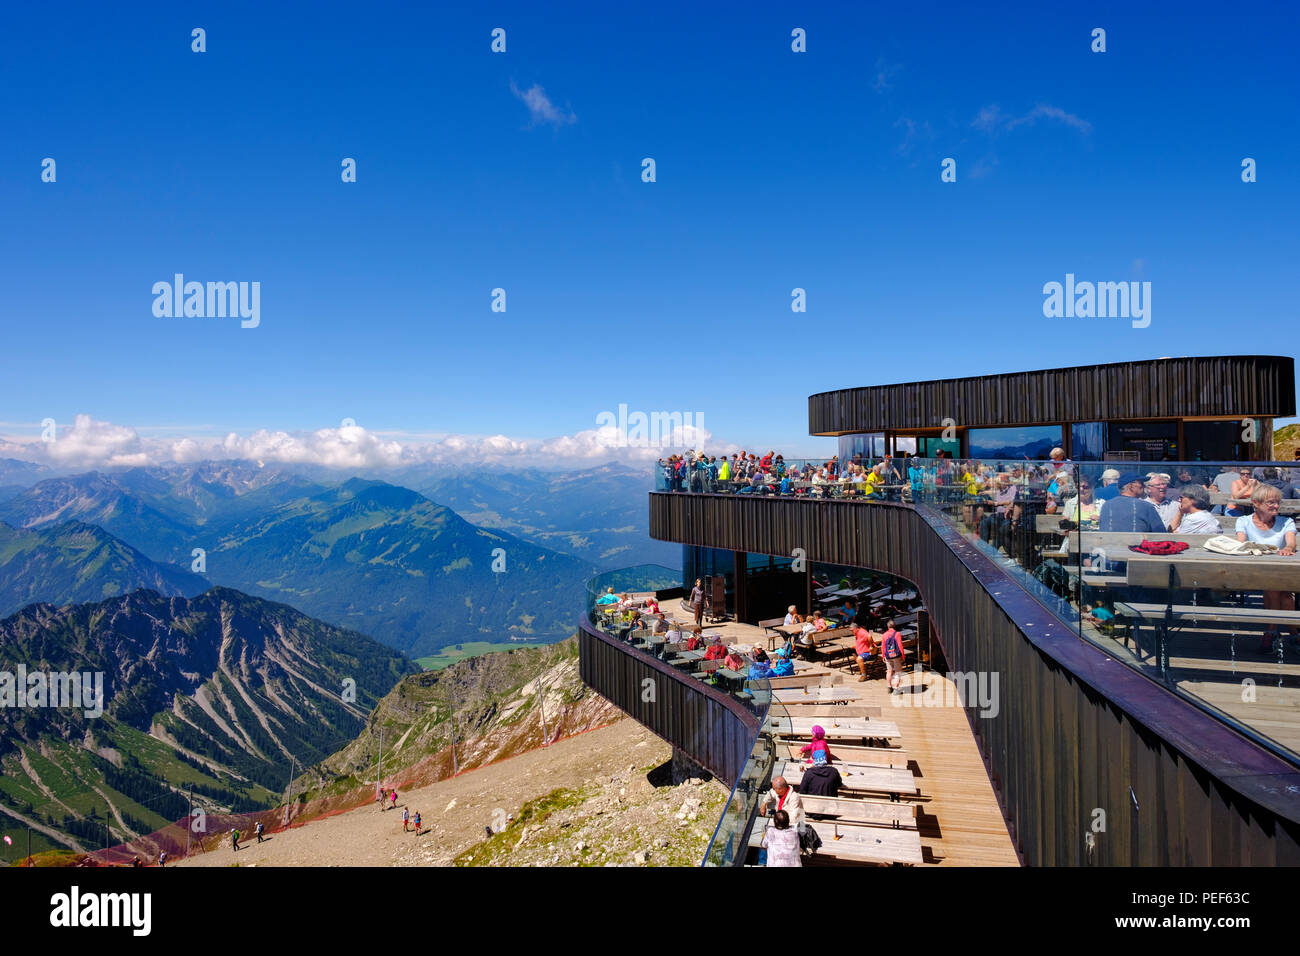 https://c8.alamy.com/comp/PEF63C/nebelhorn-summit-restaurant-2224-nebelhorn-allgu-alps-oberstdorf-oberallgu-allgu-swabia-bavaria-germany-PEF63C.jpg